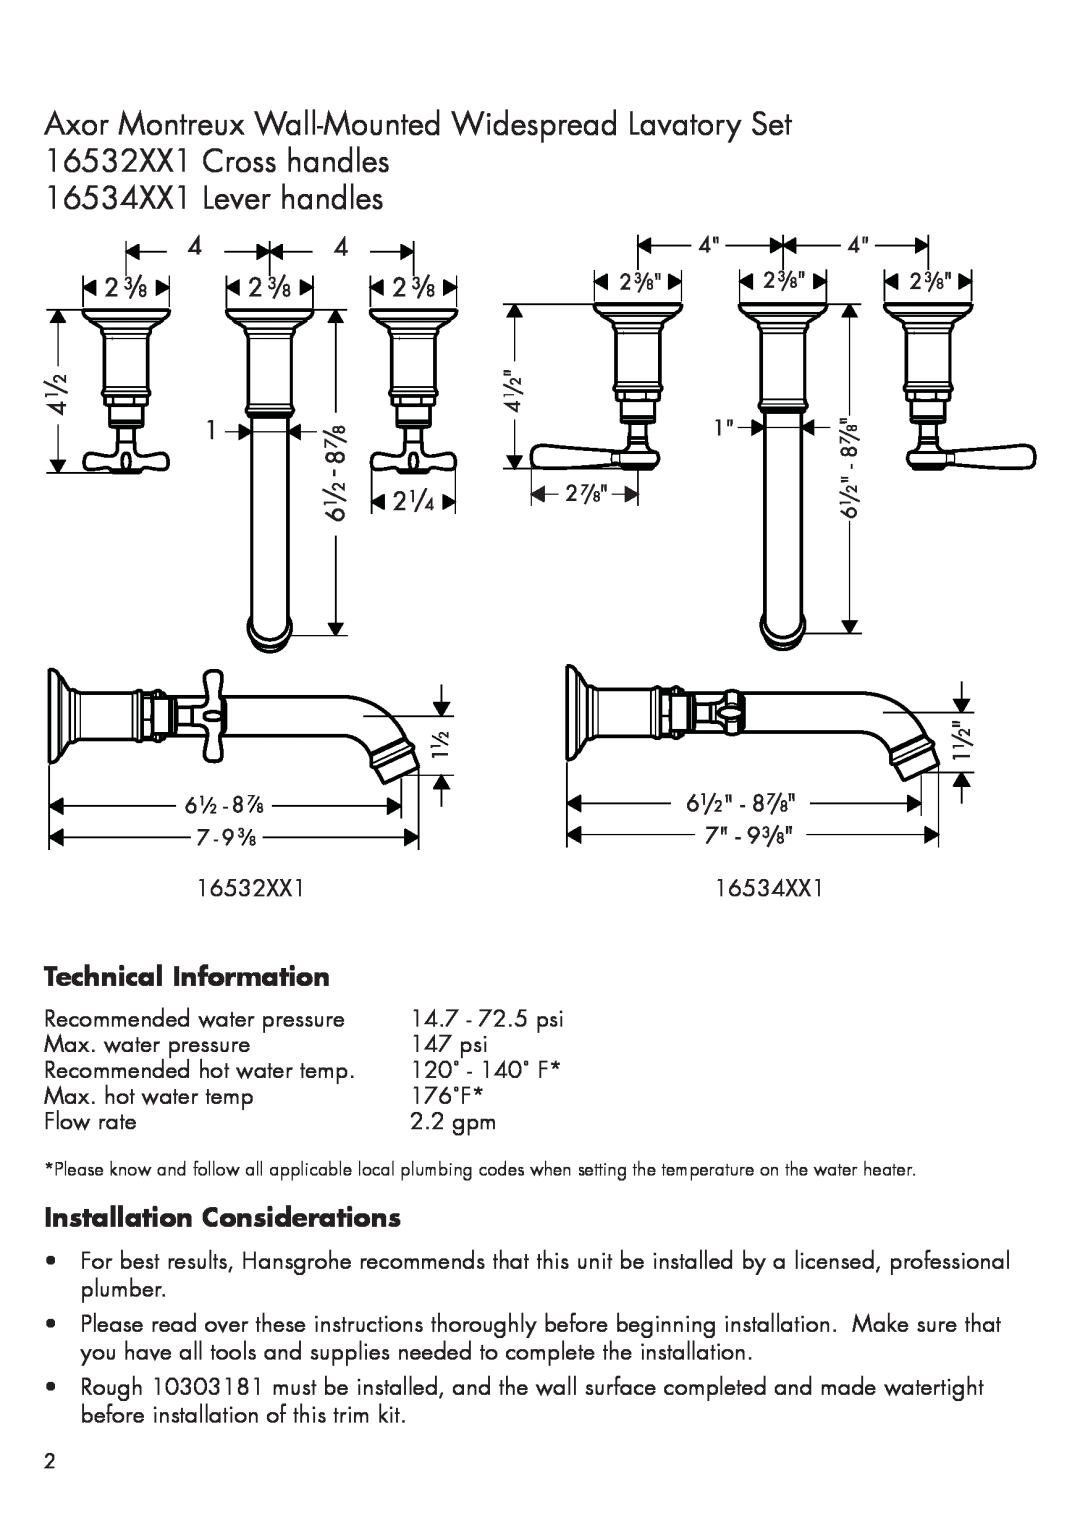 Axor installation instructions Technical Information, Installation Considerations, 16534XX1 Lever handles 